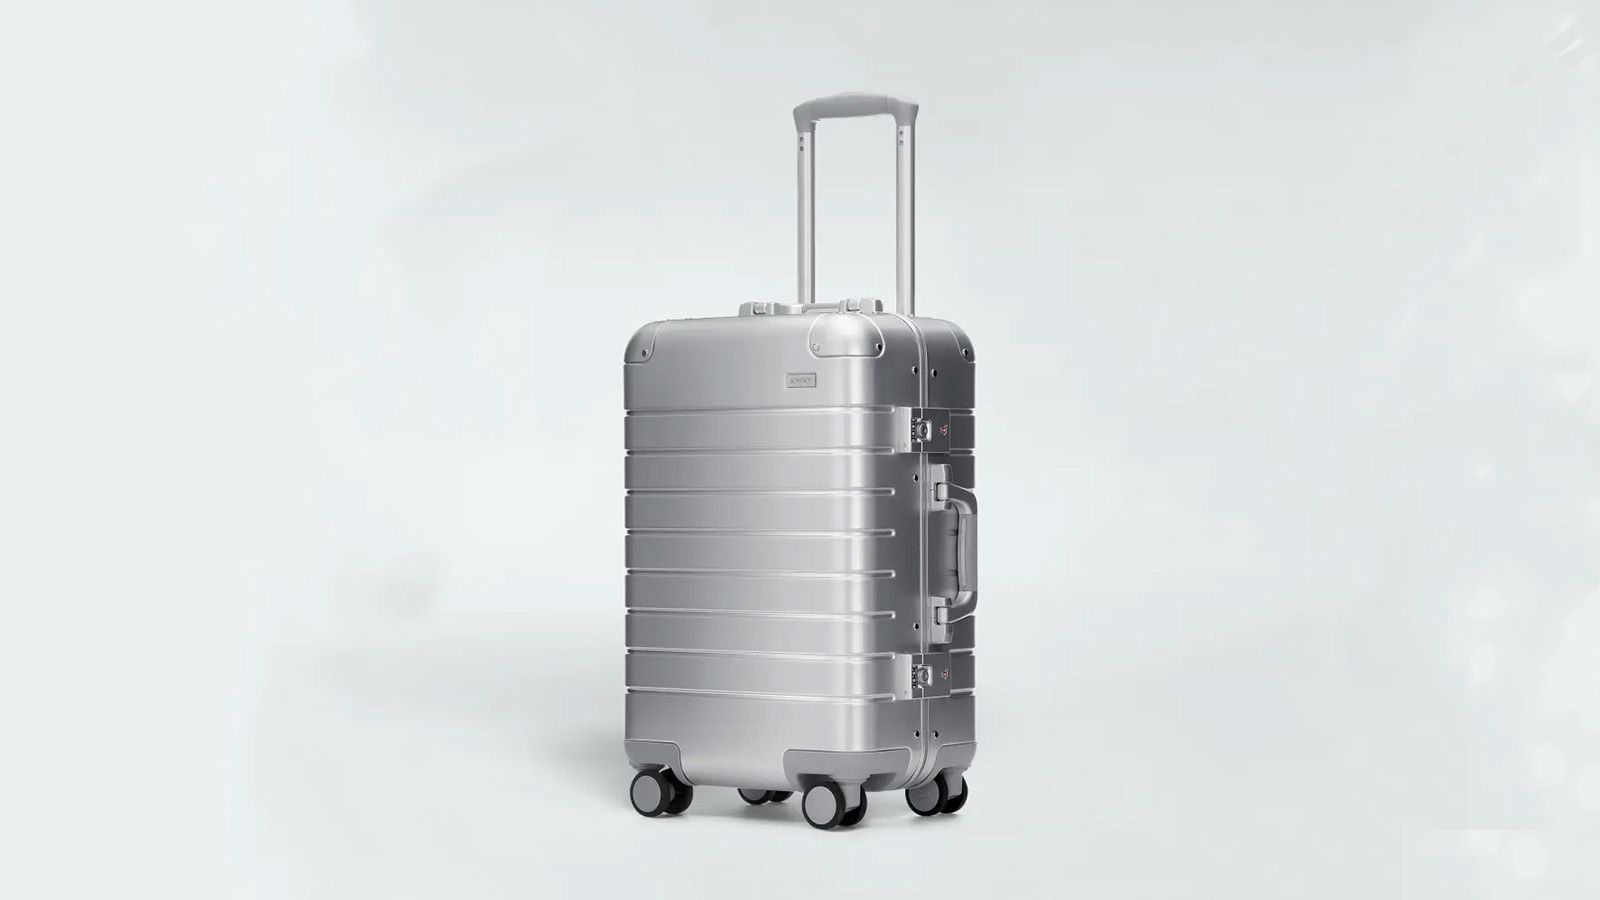 Top Reviews of Best Luggage Brands 2023: Away, Calpak, Rimowa